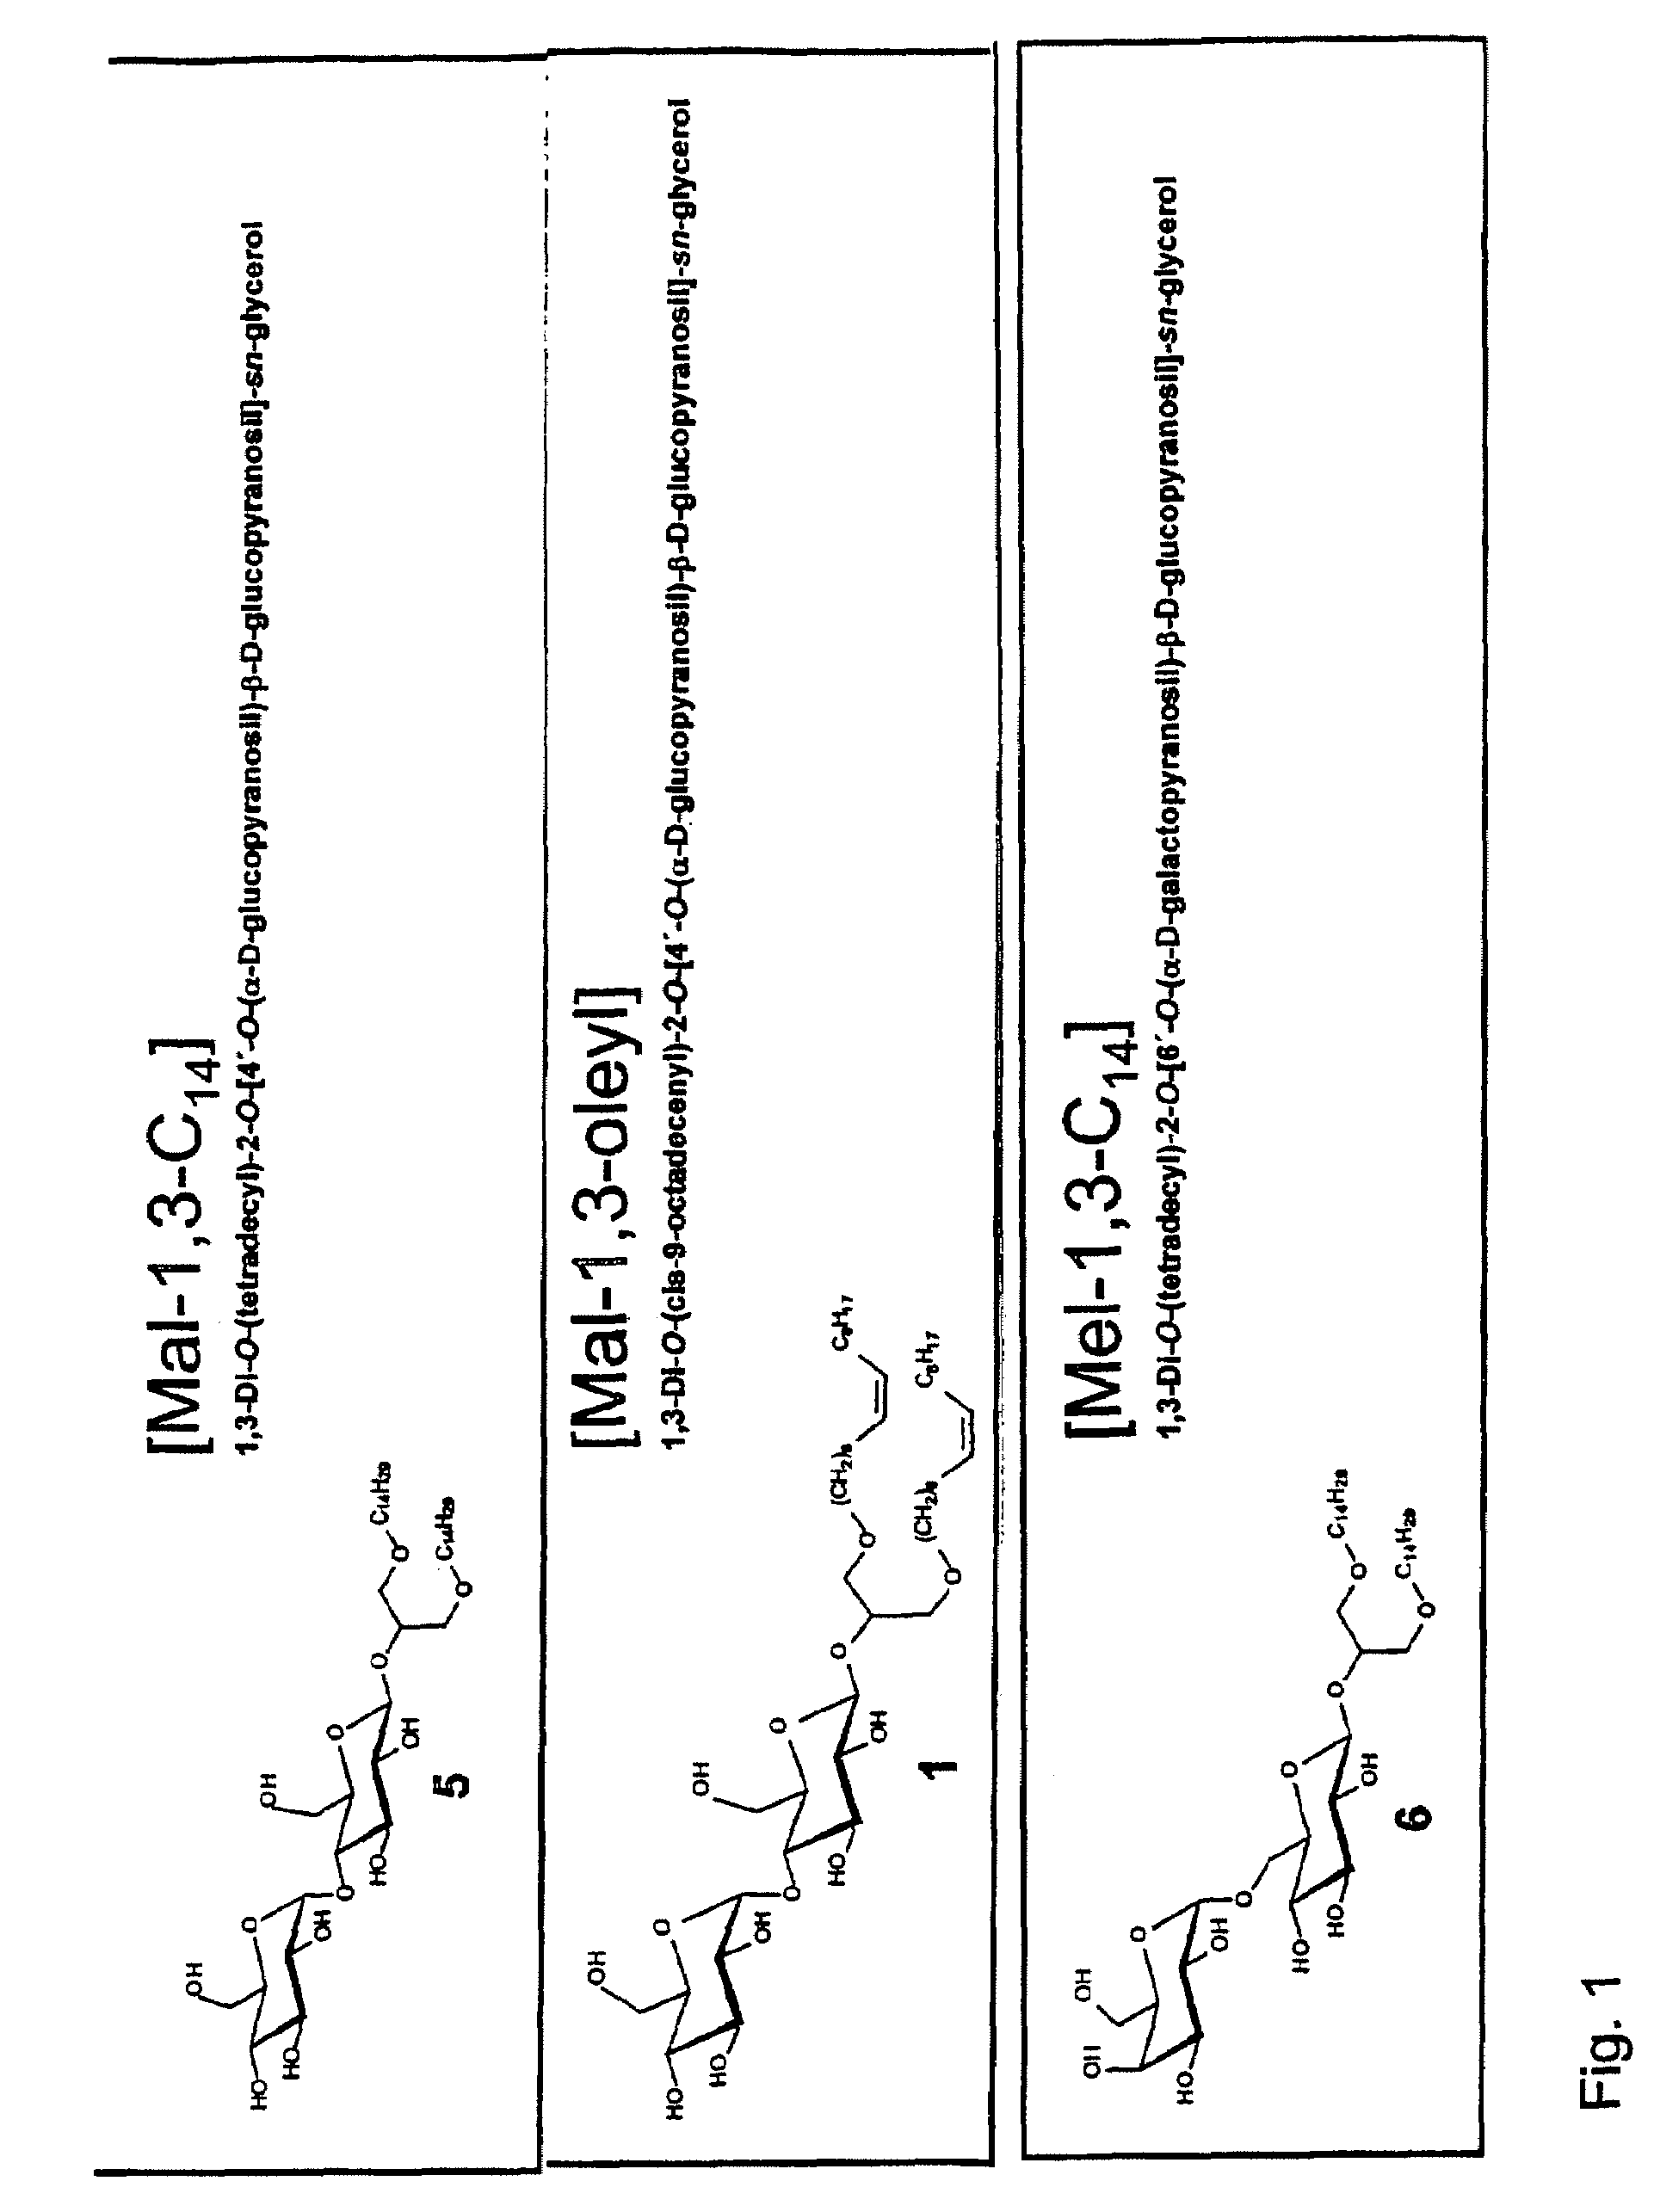 Use of glycolipids as adjuvants